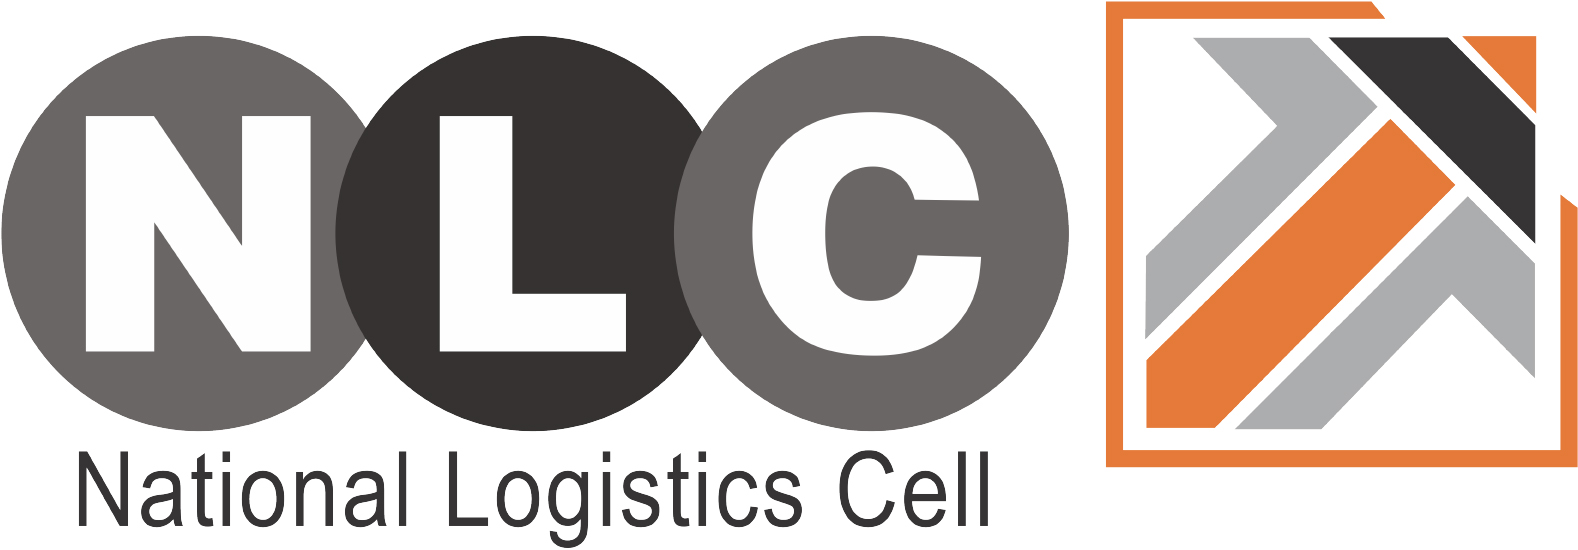 NLC-logo